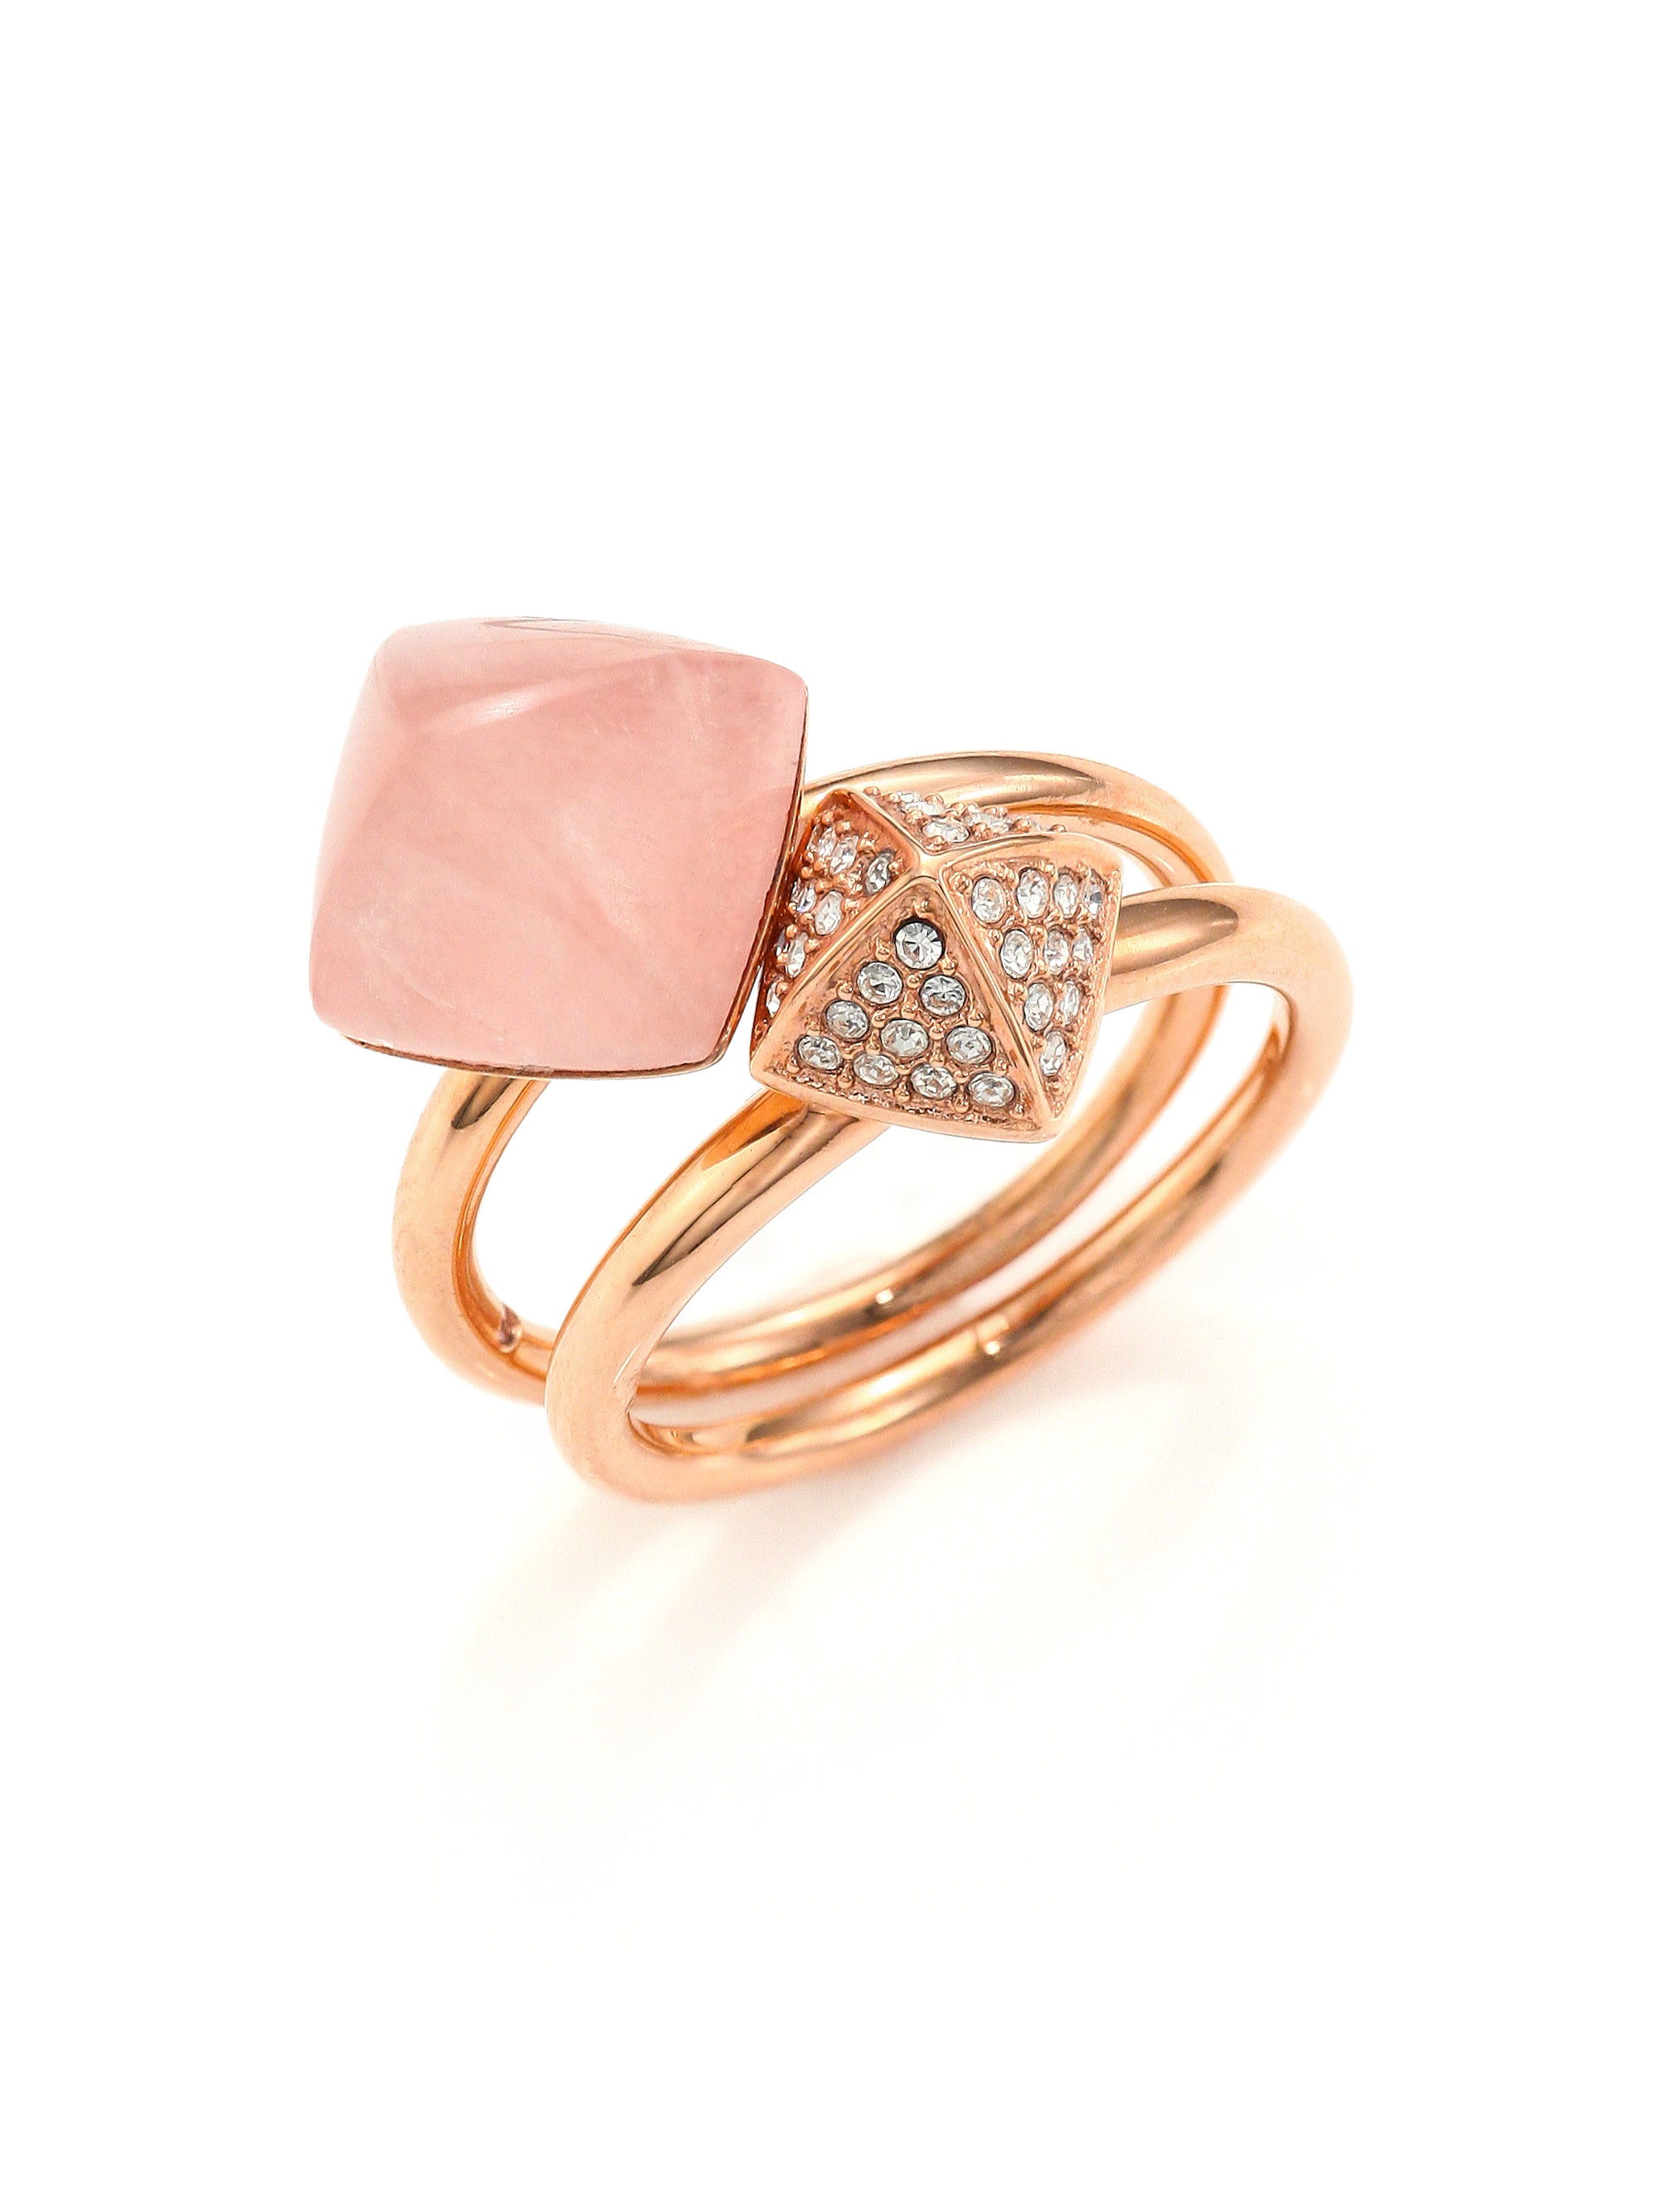 Michael Kors Rose Pyramid Ring Set in Rose Gold (Pink) - Lyst